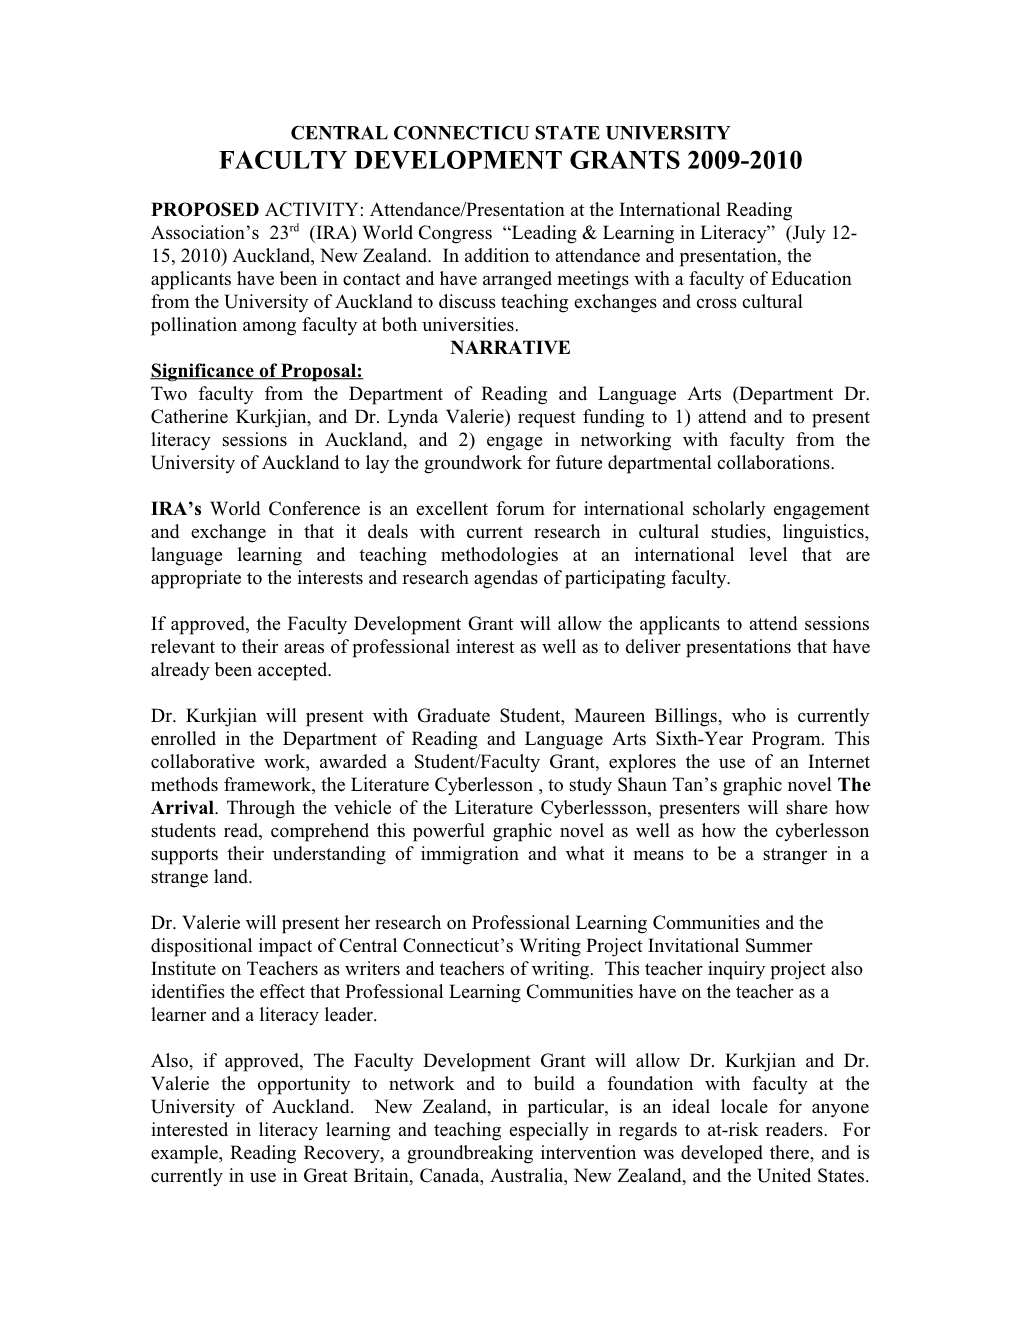 Faculty Development Grants 2007-2008